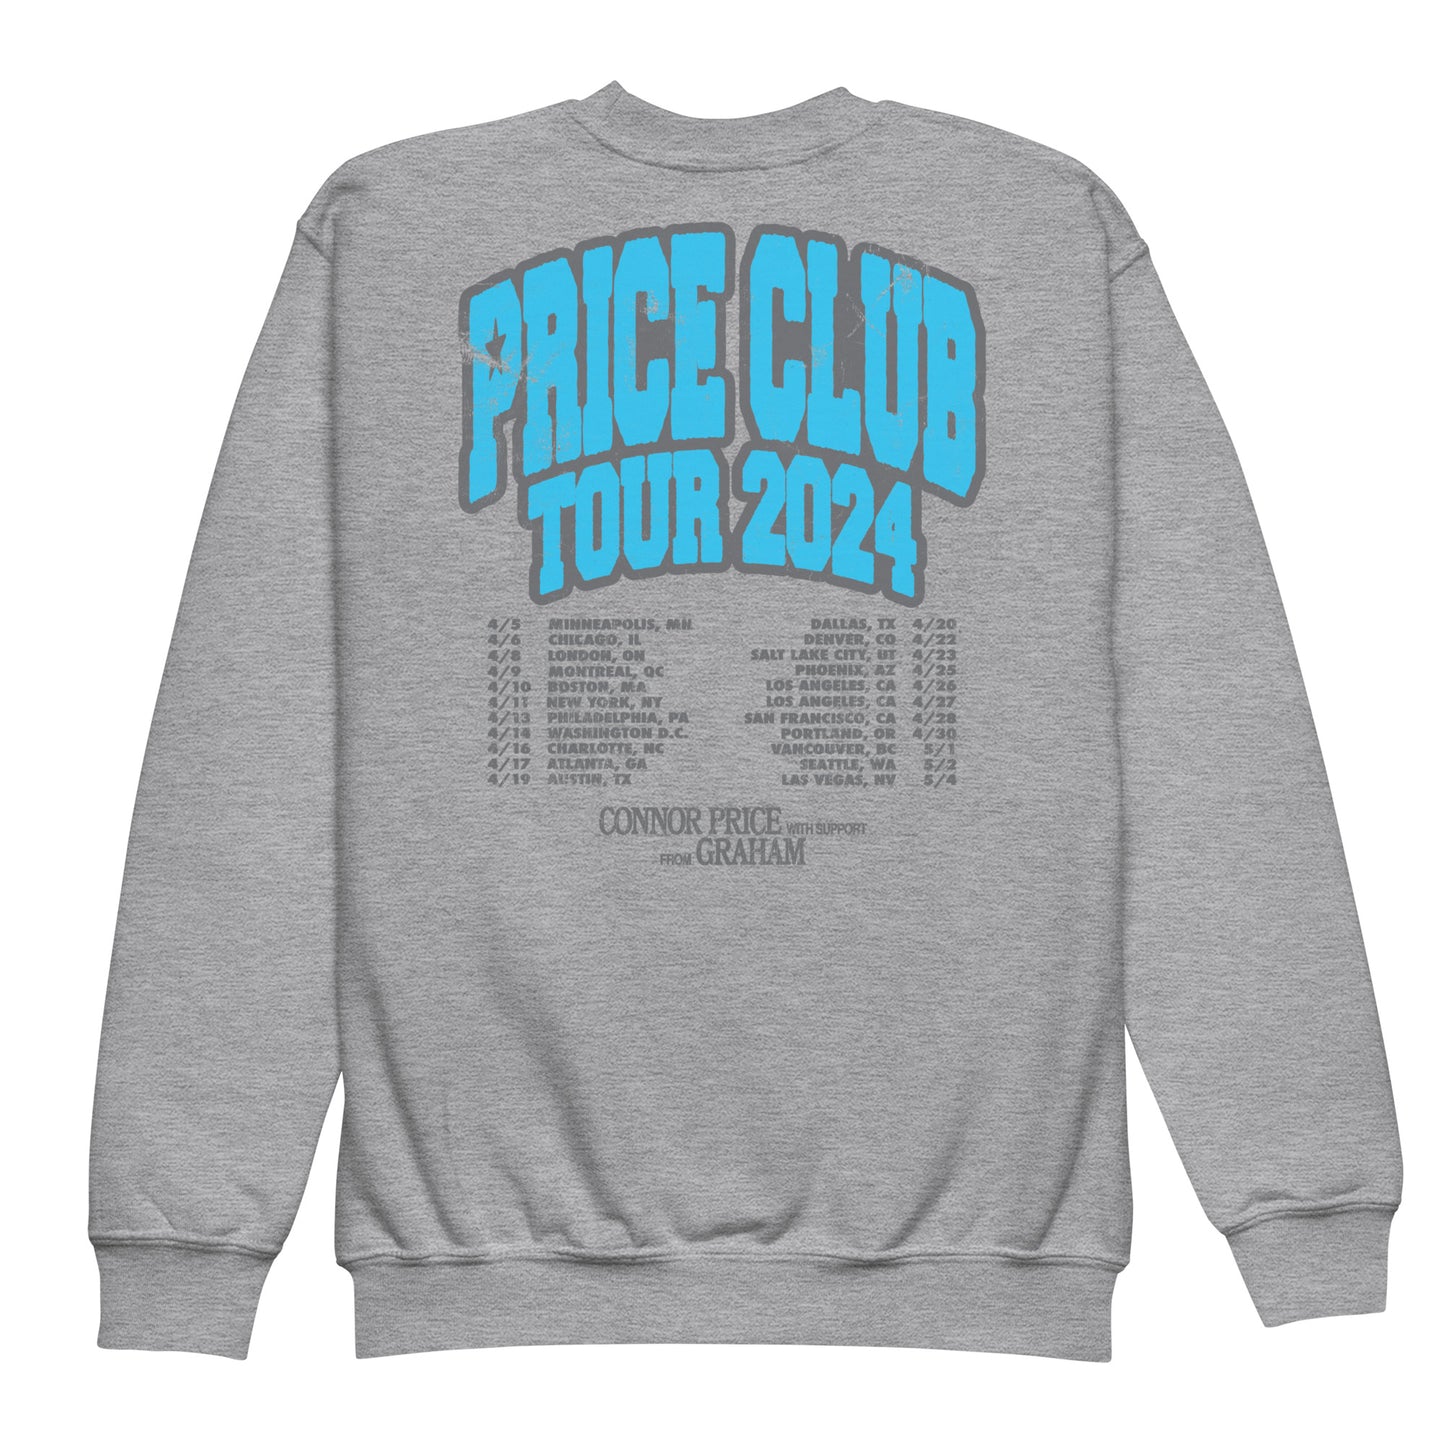 *Youth Sizing* PRICE CLUB TOUR 2024 - Globe Spinner Sweatshirt